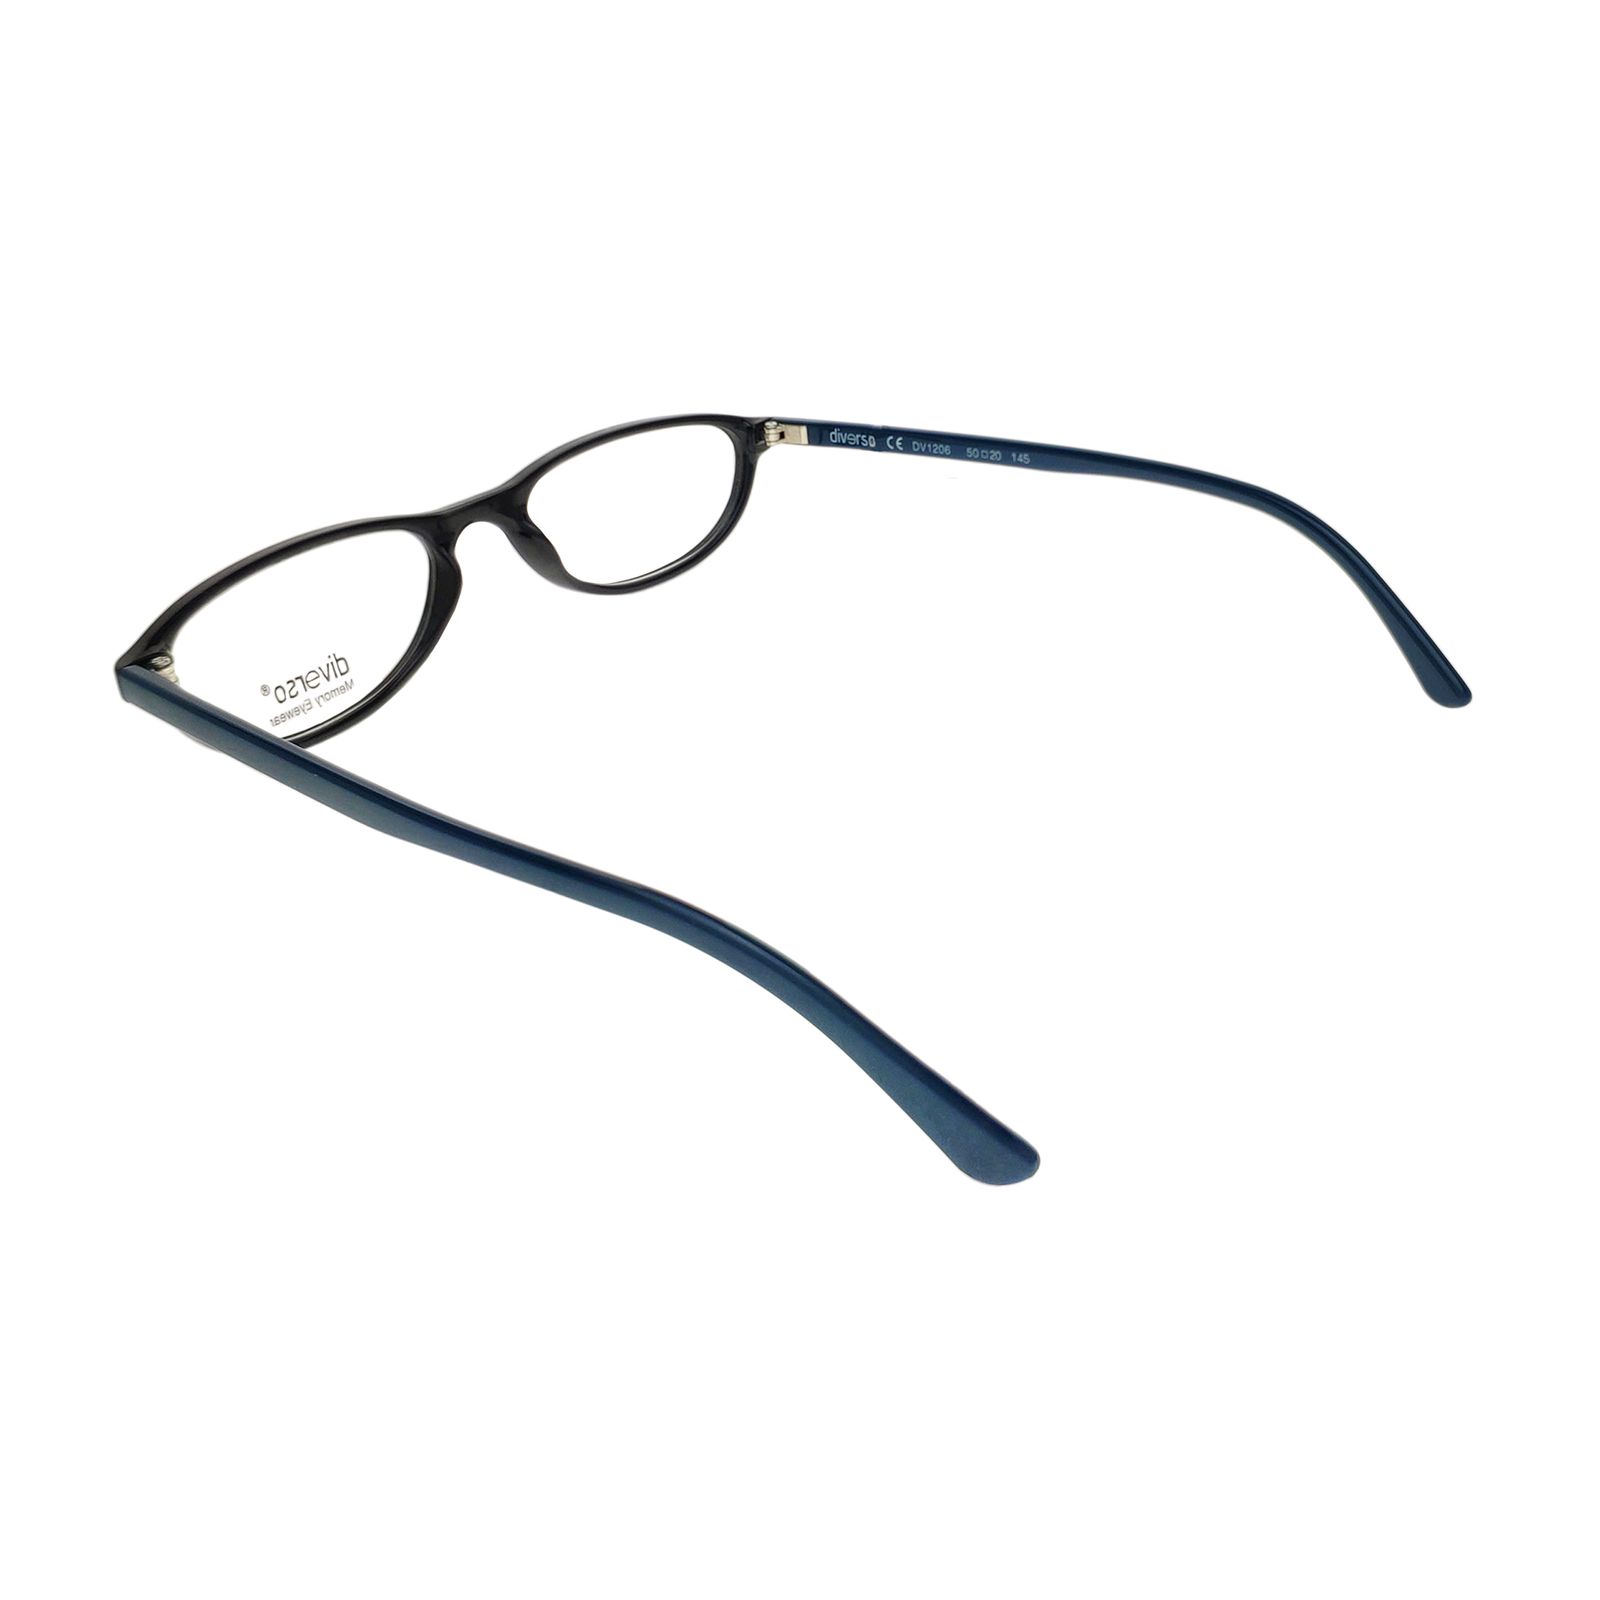 فریم عینک طبی دیورسو مدل 1647 - DV1206C0639 - 50.20.145 -  - 5